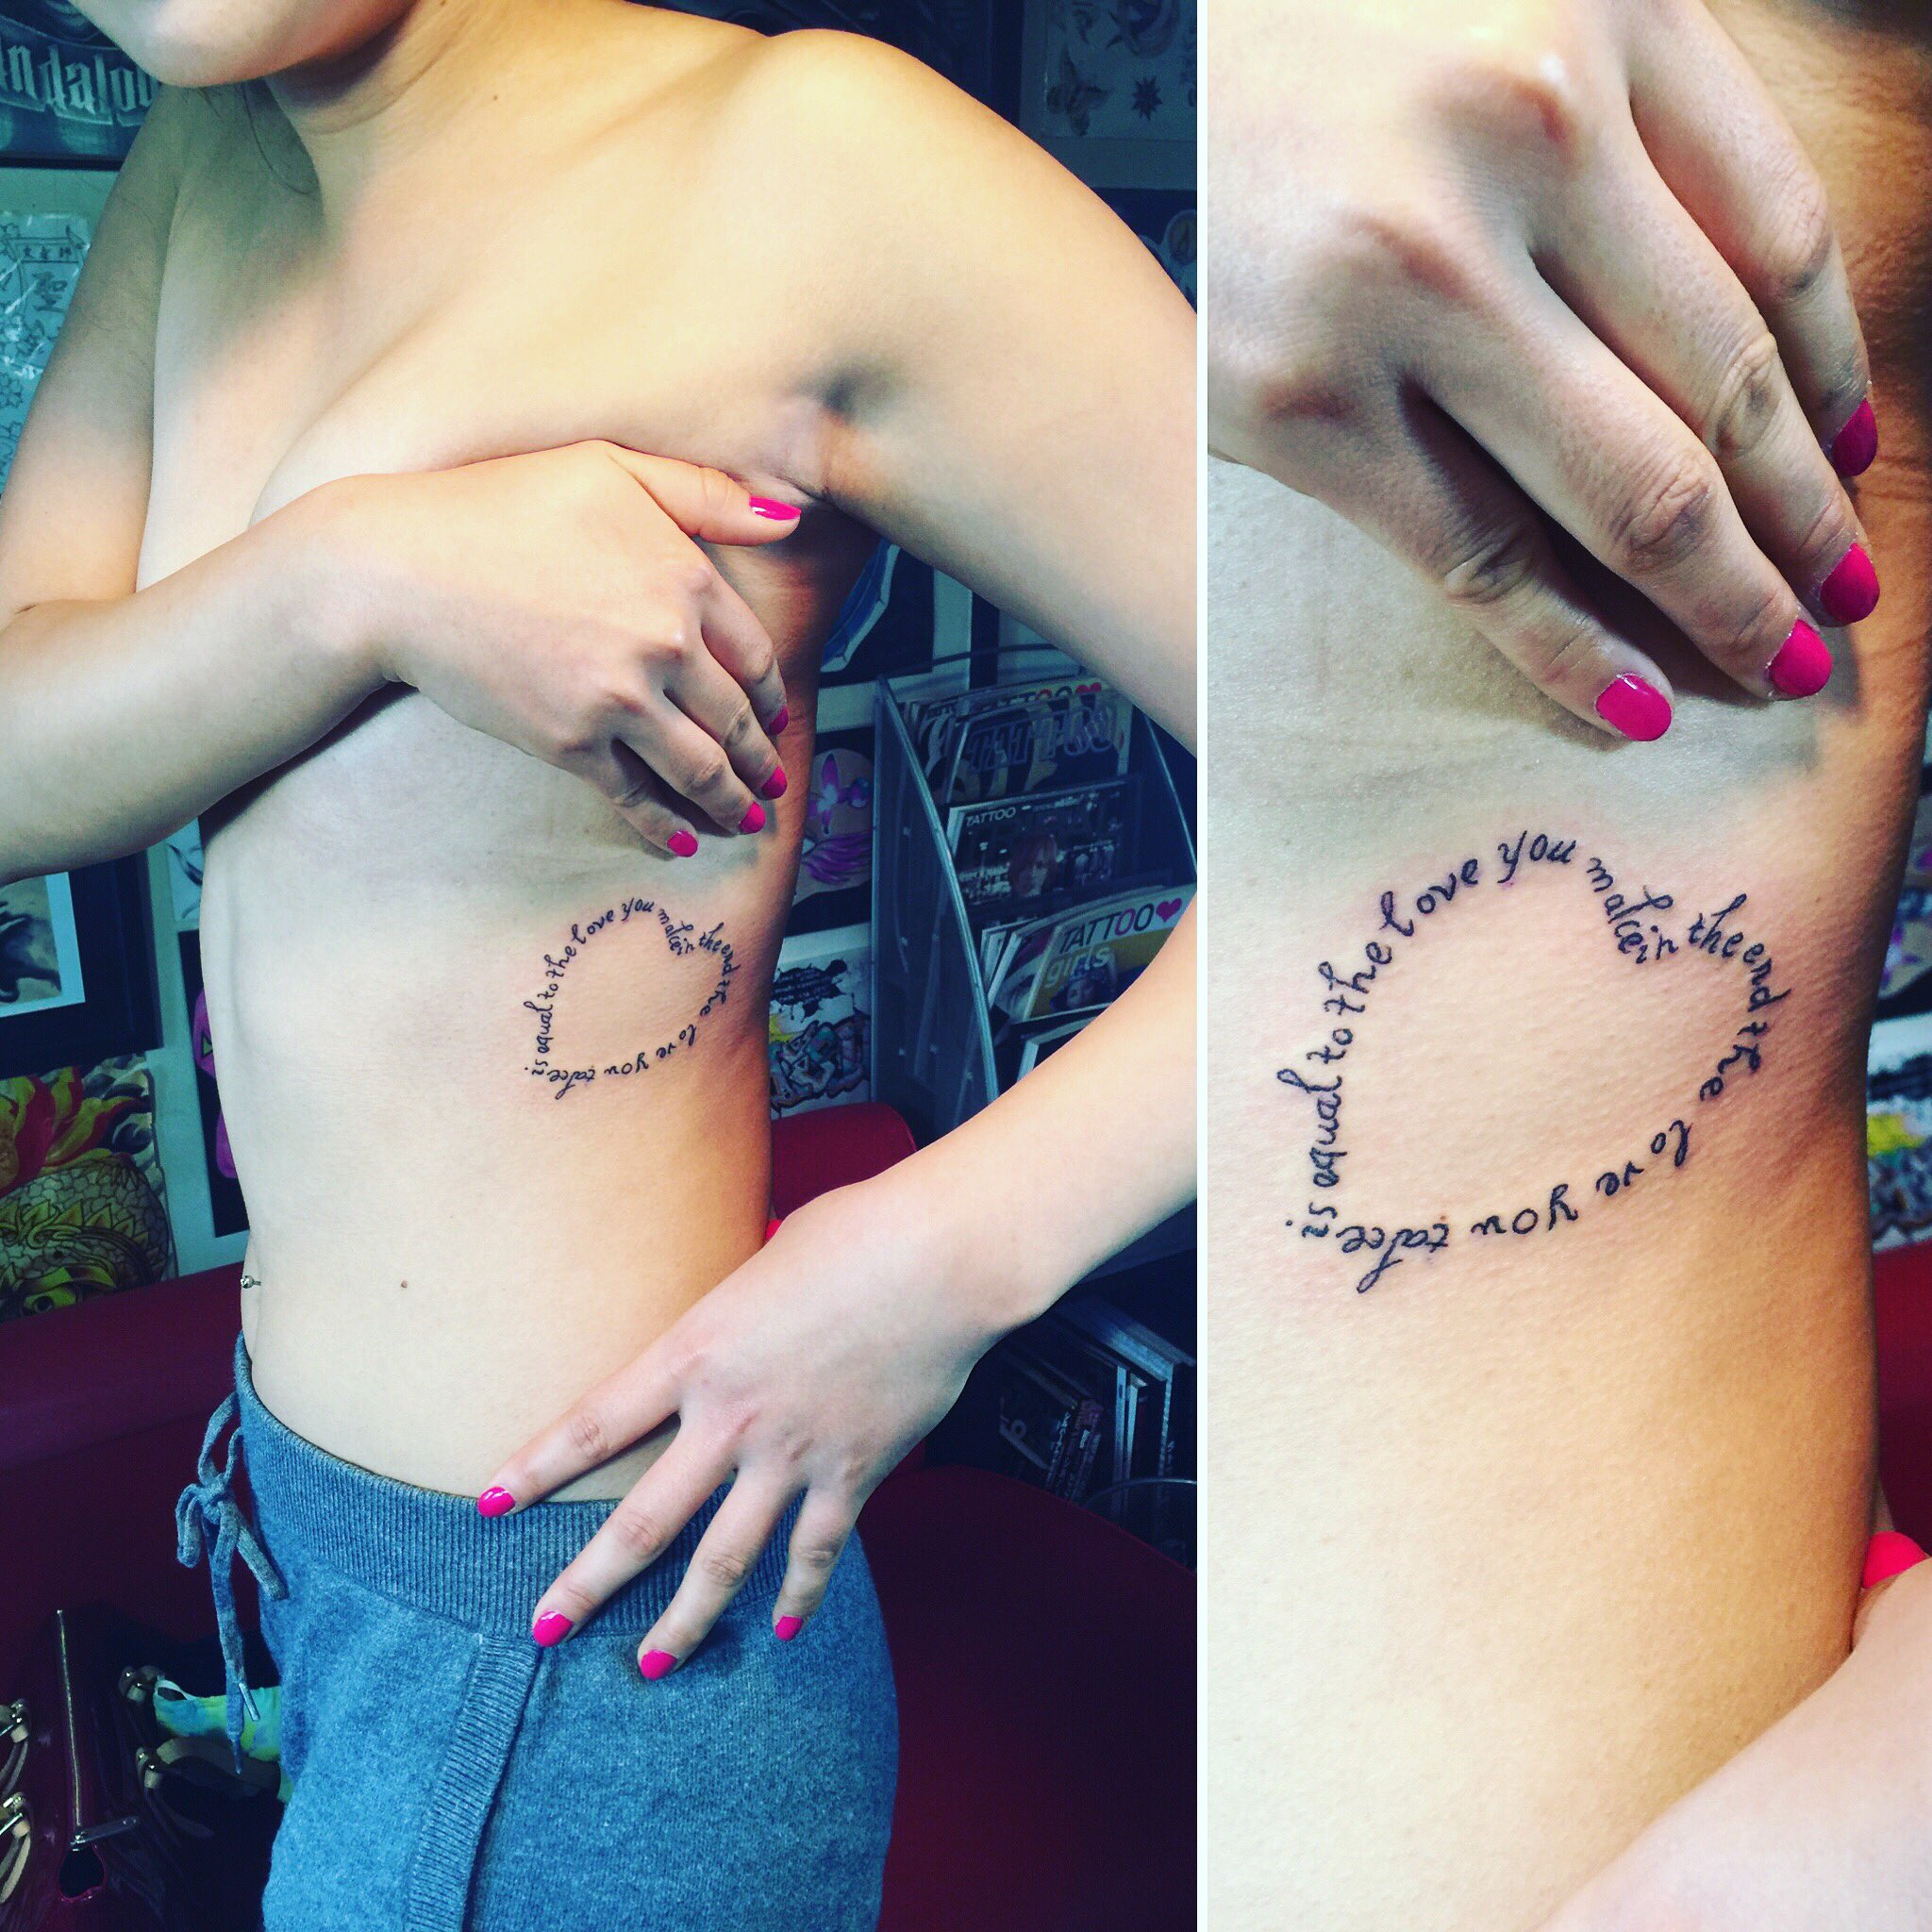 2face Tattoo Studio 女の子の脇腹に 型のメッセージ彫りました Tattoo タトゥー好きな人rt タトゥー 刺青 Heart ハート メッセージ ワンポイント 千葉 木更津 聖針 T Co Xkoizzljtu Twitter